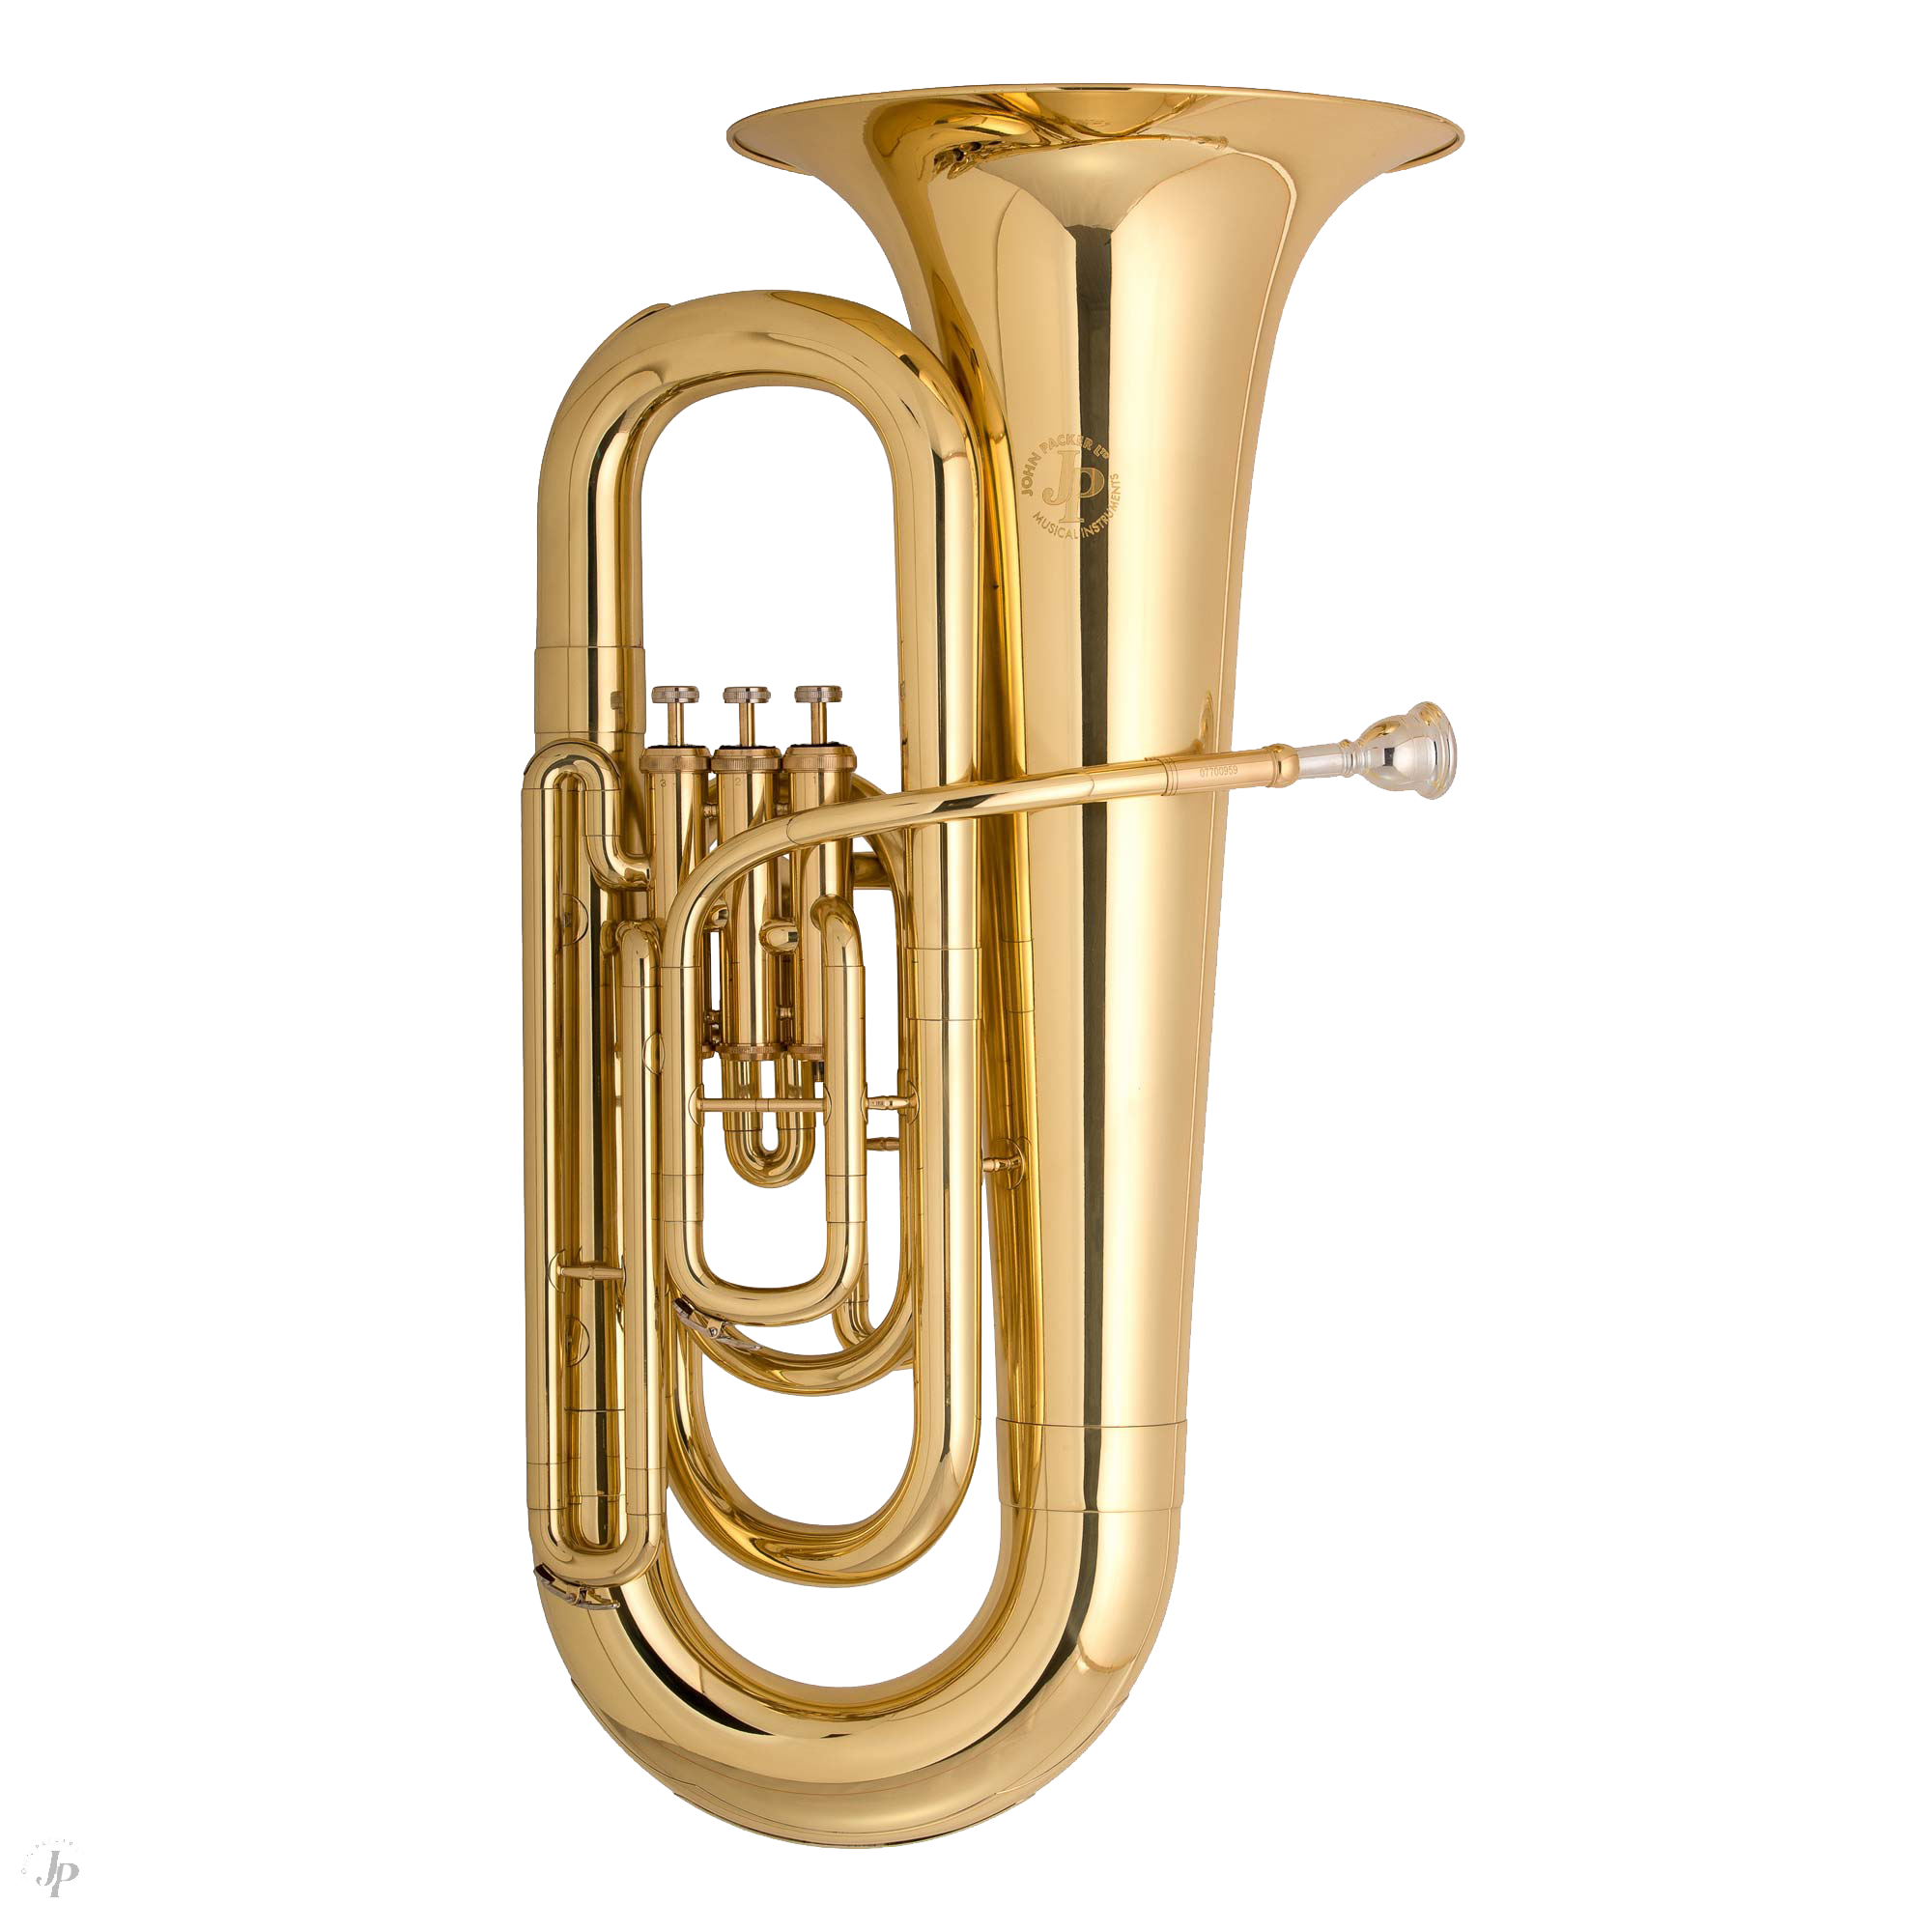 Jazz Instruments PNG-PlusPNG.